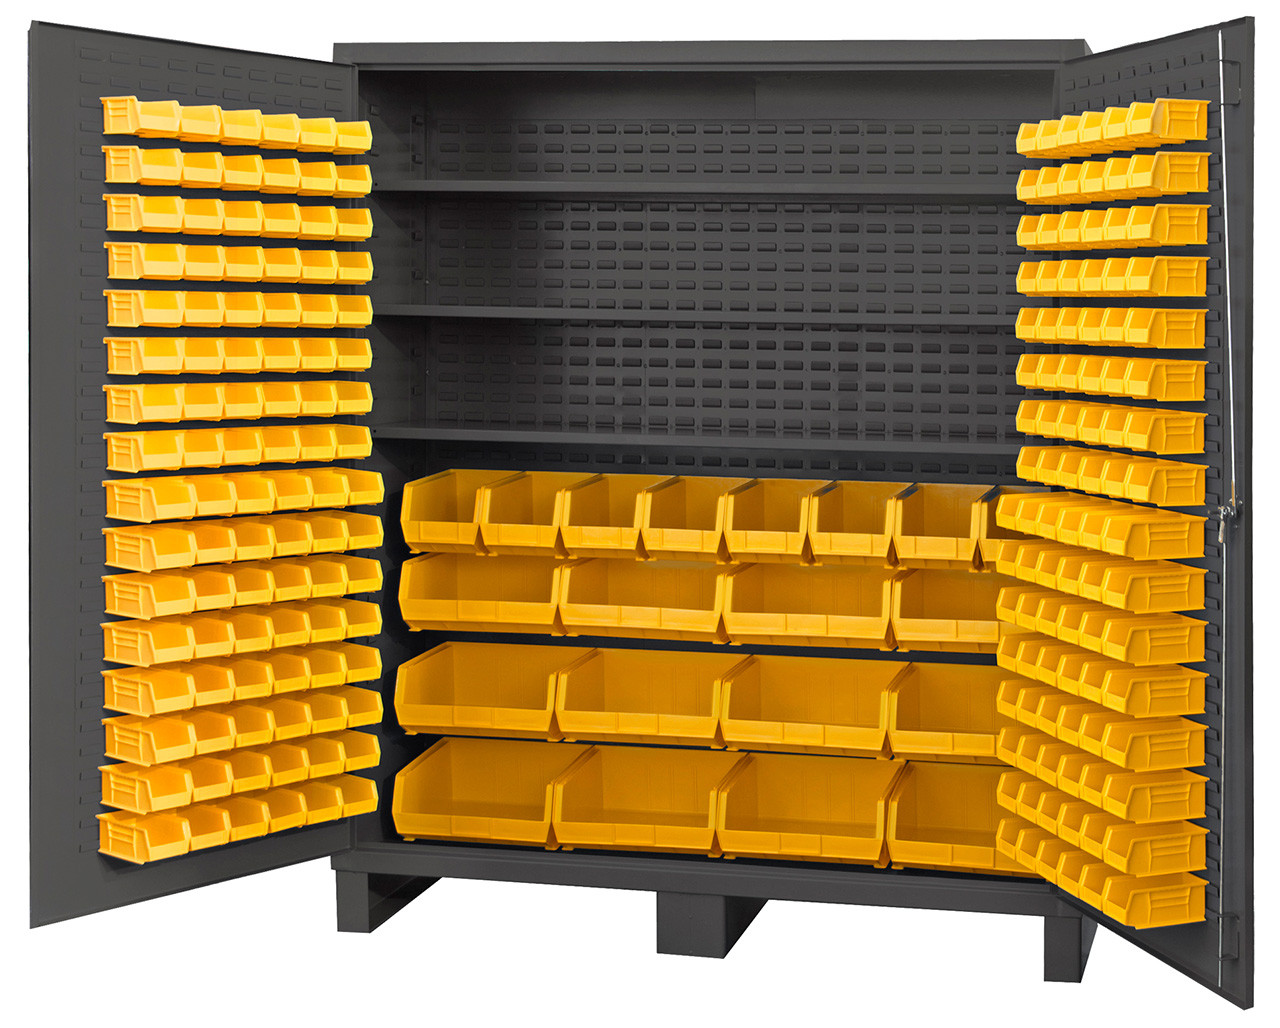 912785-4 Durham Bin Cabinet: 36 in x 24 in 72 in, 4 Shelves, 96 Bins,  Yellow, Deep Box, 14 ga Panel, Gray